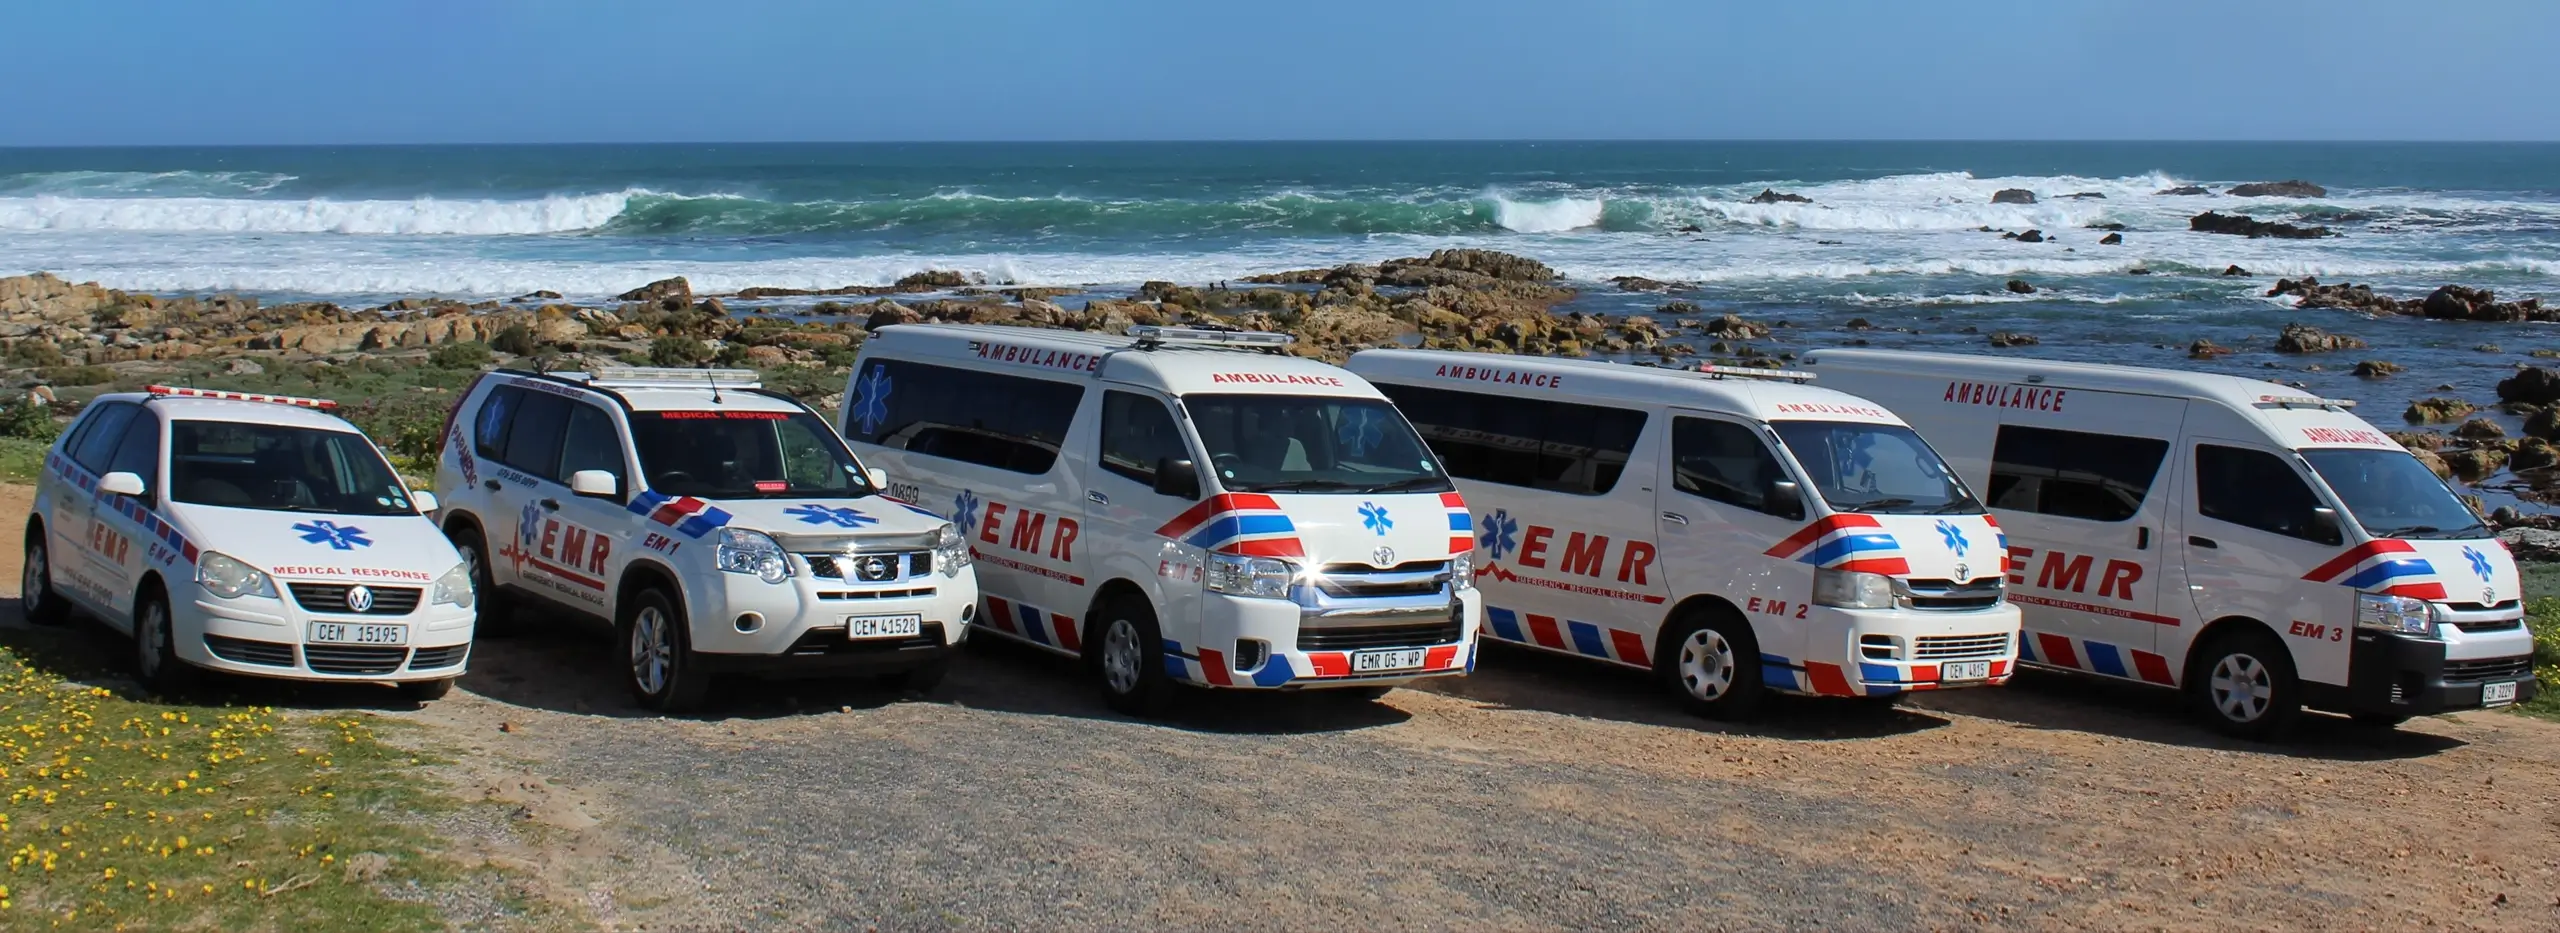 Row of EMR emergency vehicles